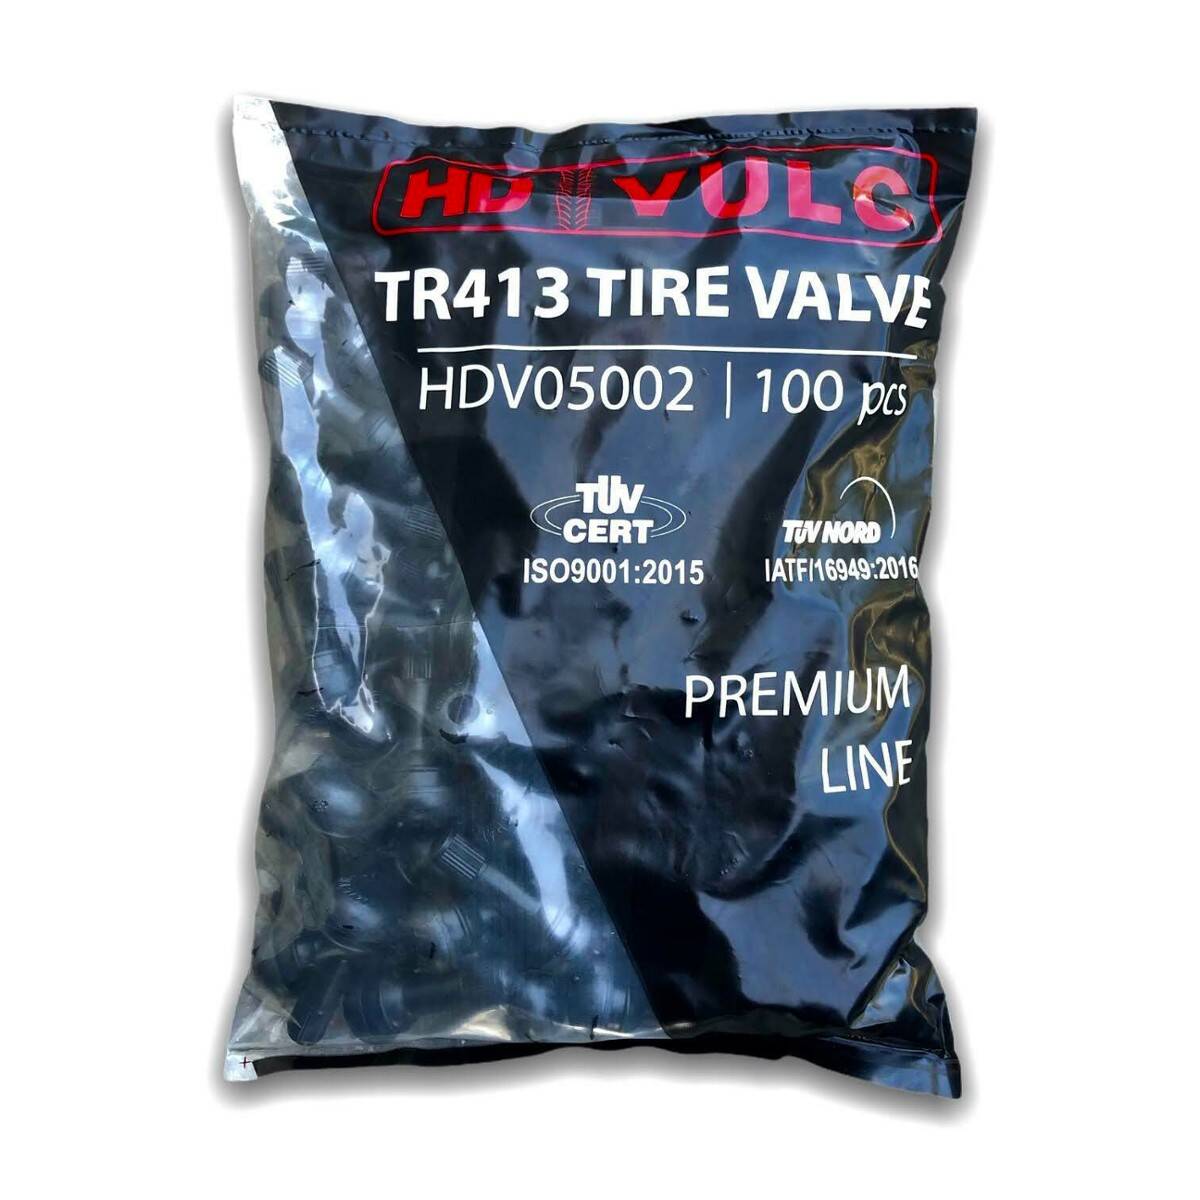 TR413 HD VULC PREMIUM tubeless valve